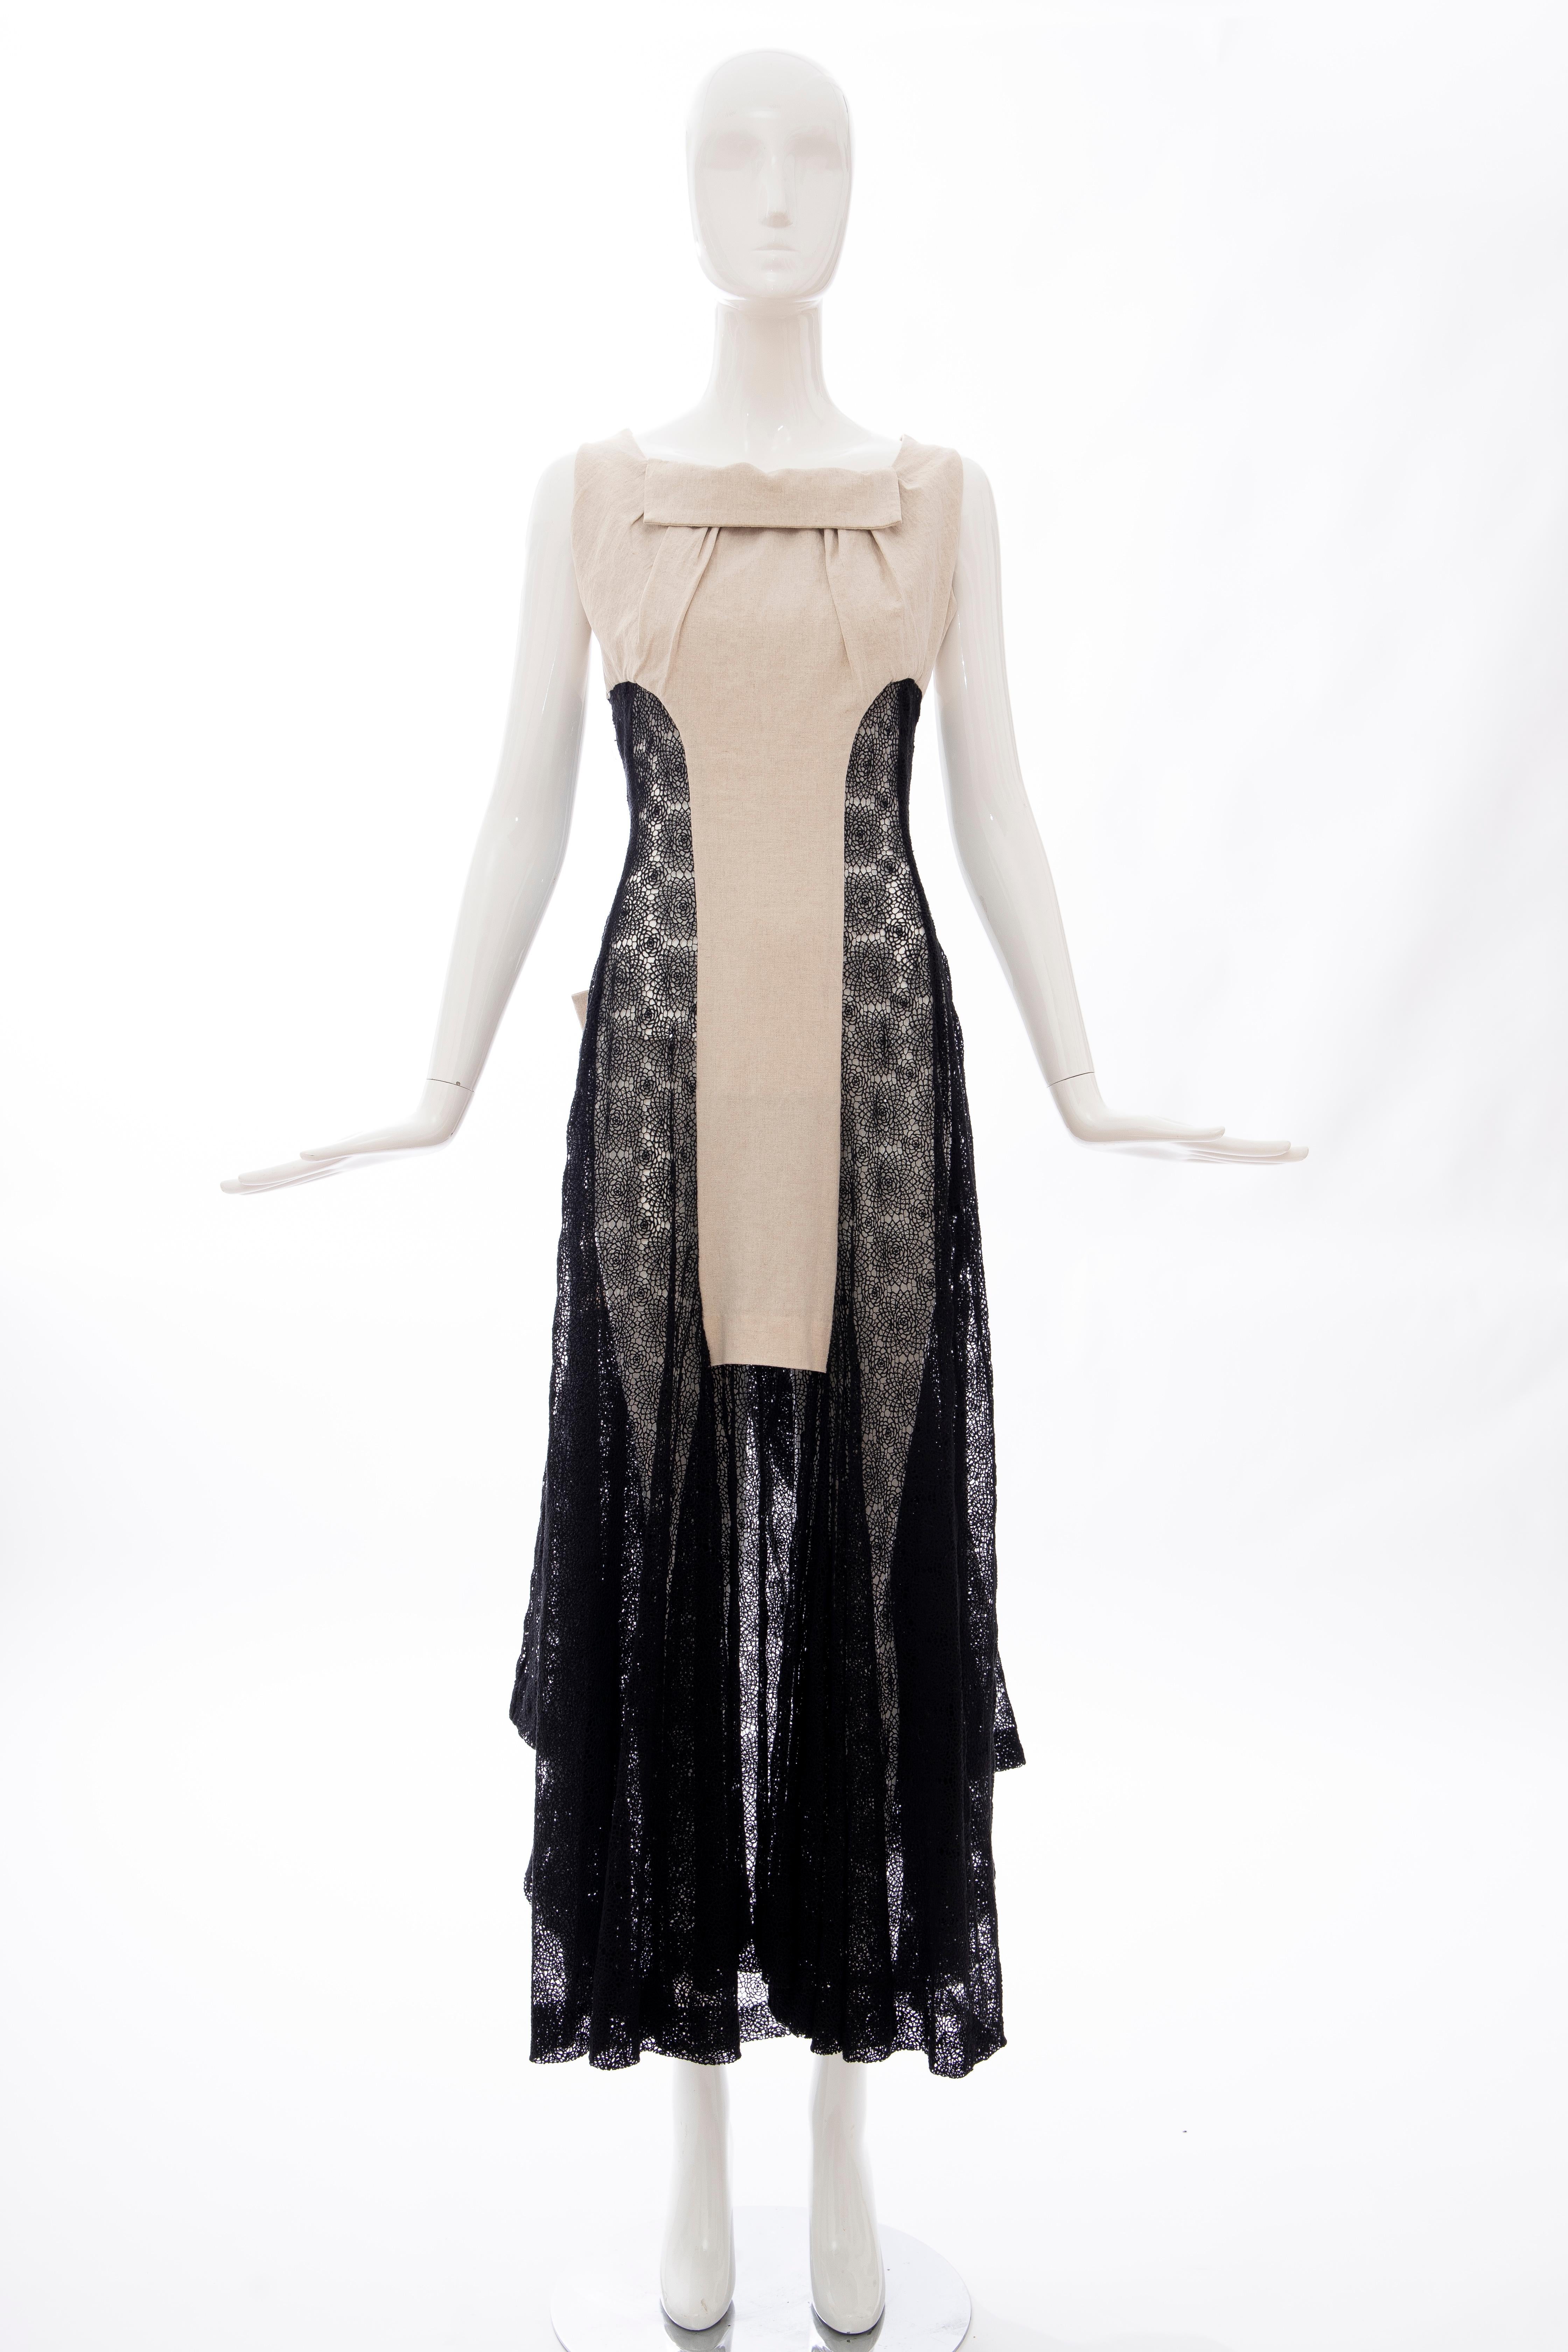 Yohji Yamamoto, Runway Spring 2005, black cotton sleeveless lace dress with natural linen and side zip.

Japan: 2

Bust: 30.5